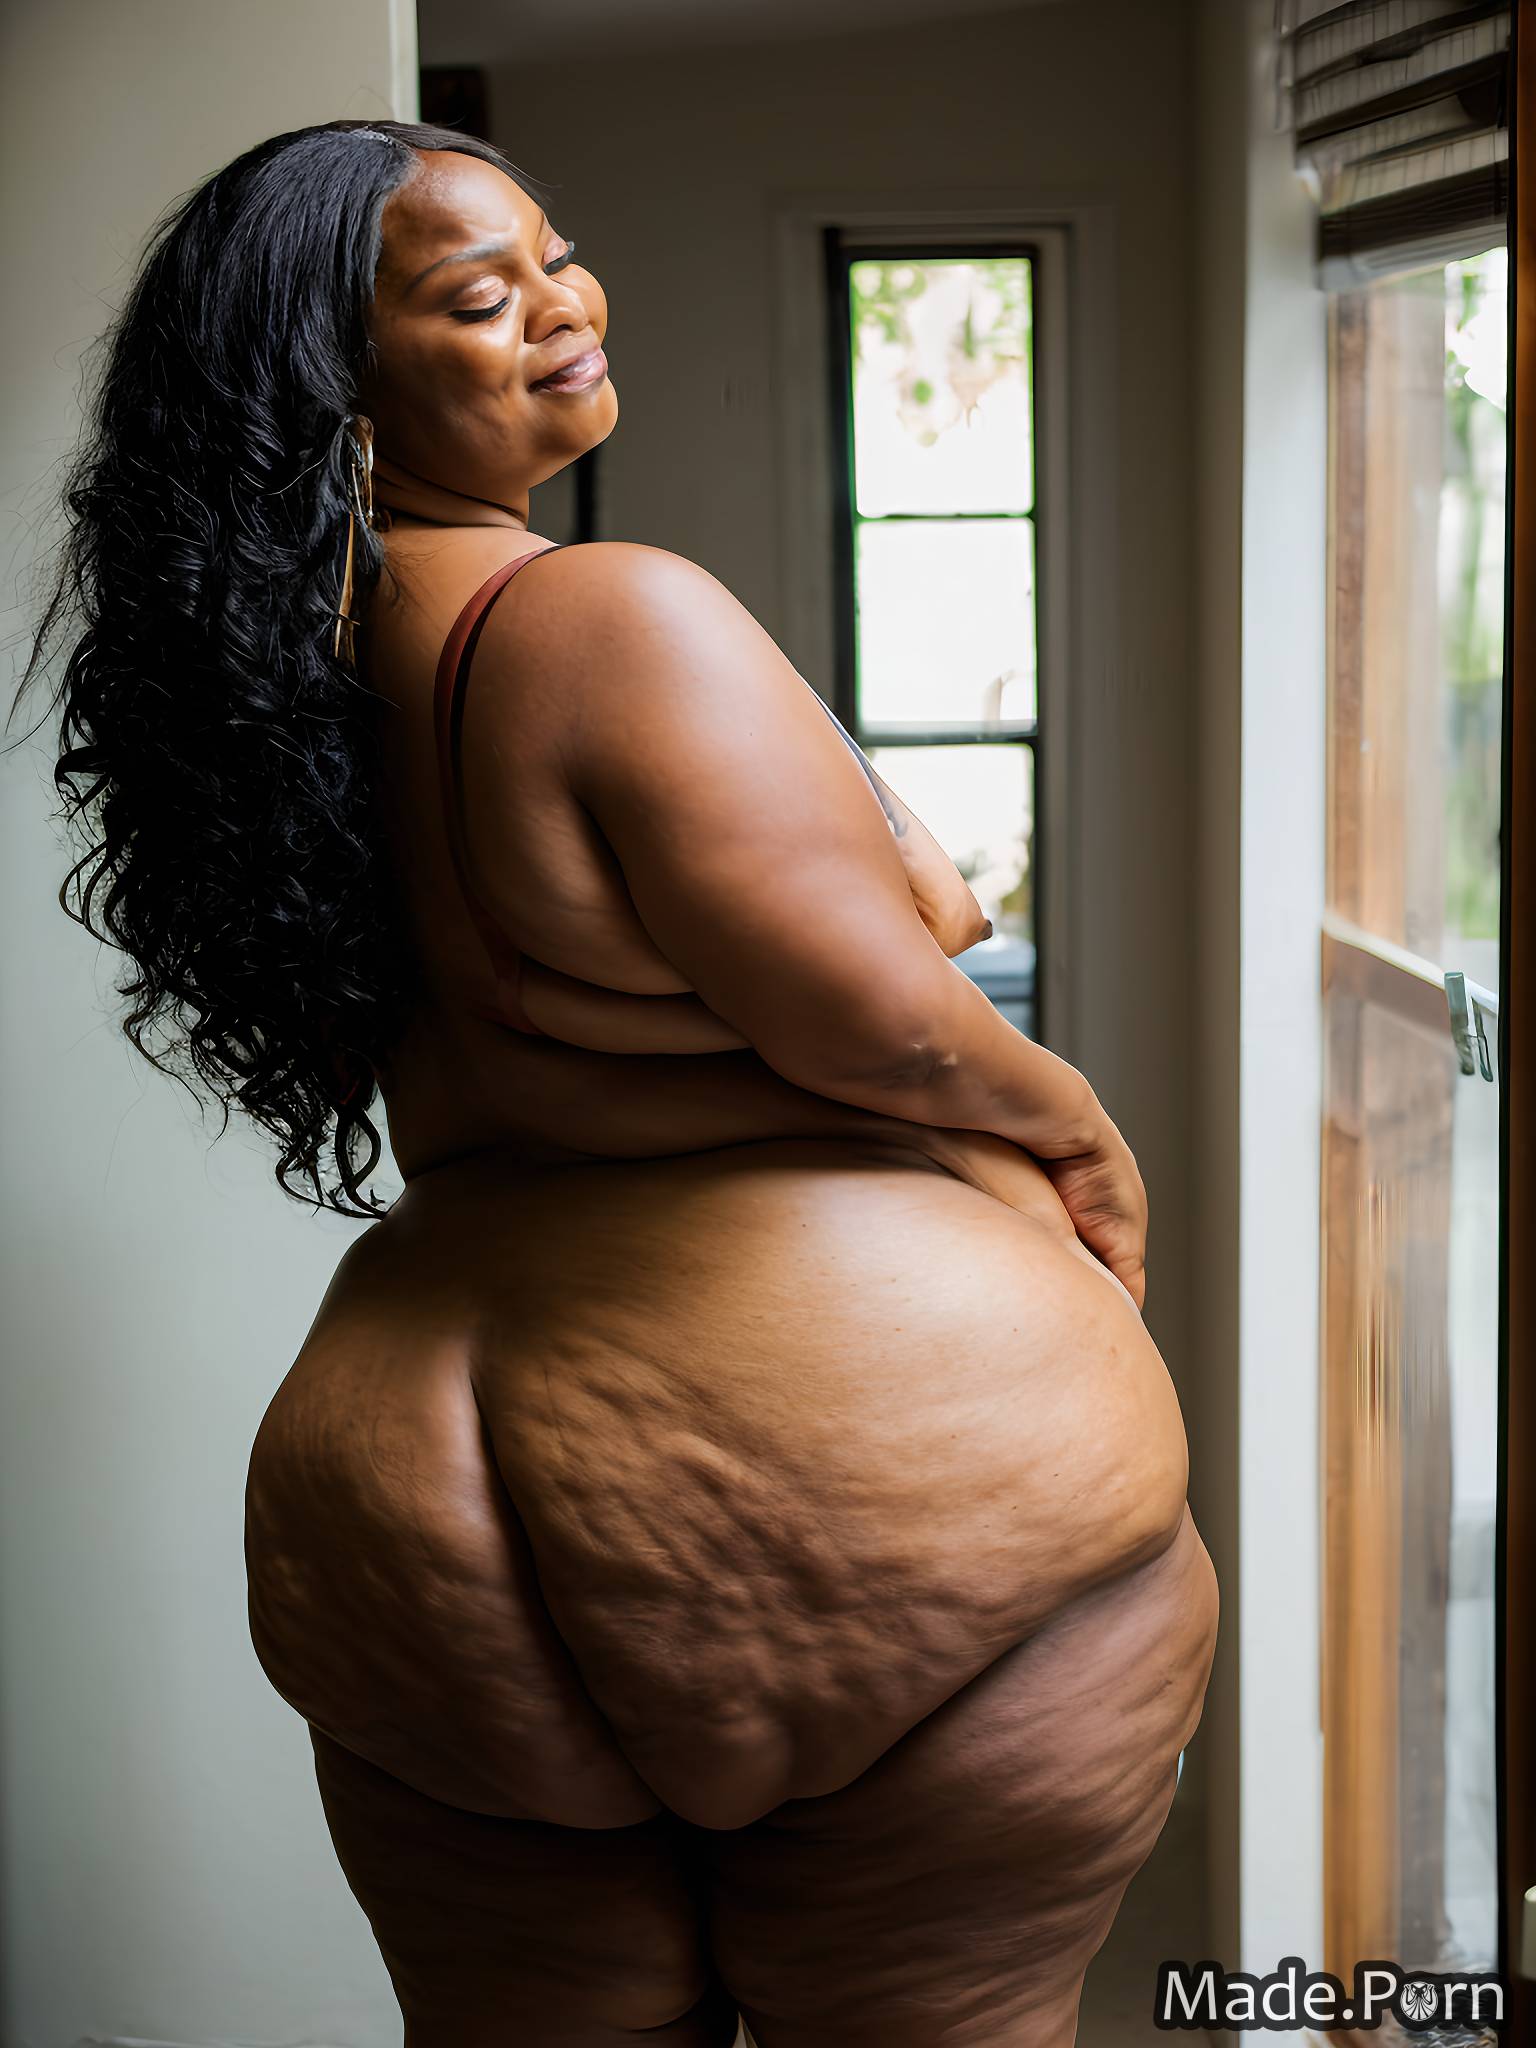 woman chubby photo thick thighs big ass short ssbbw